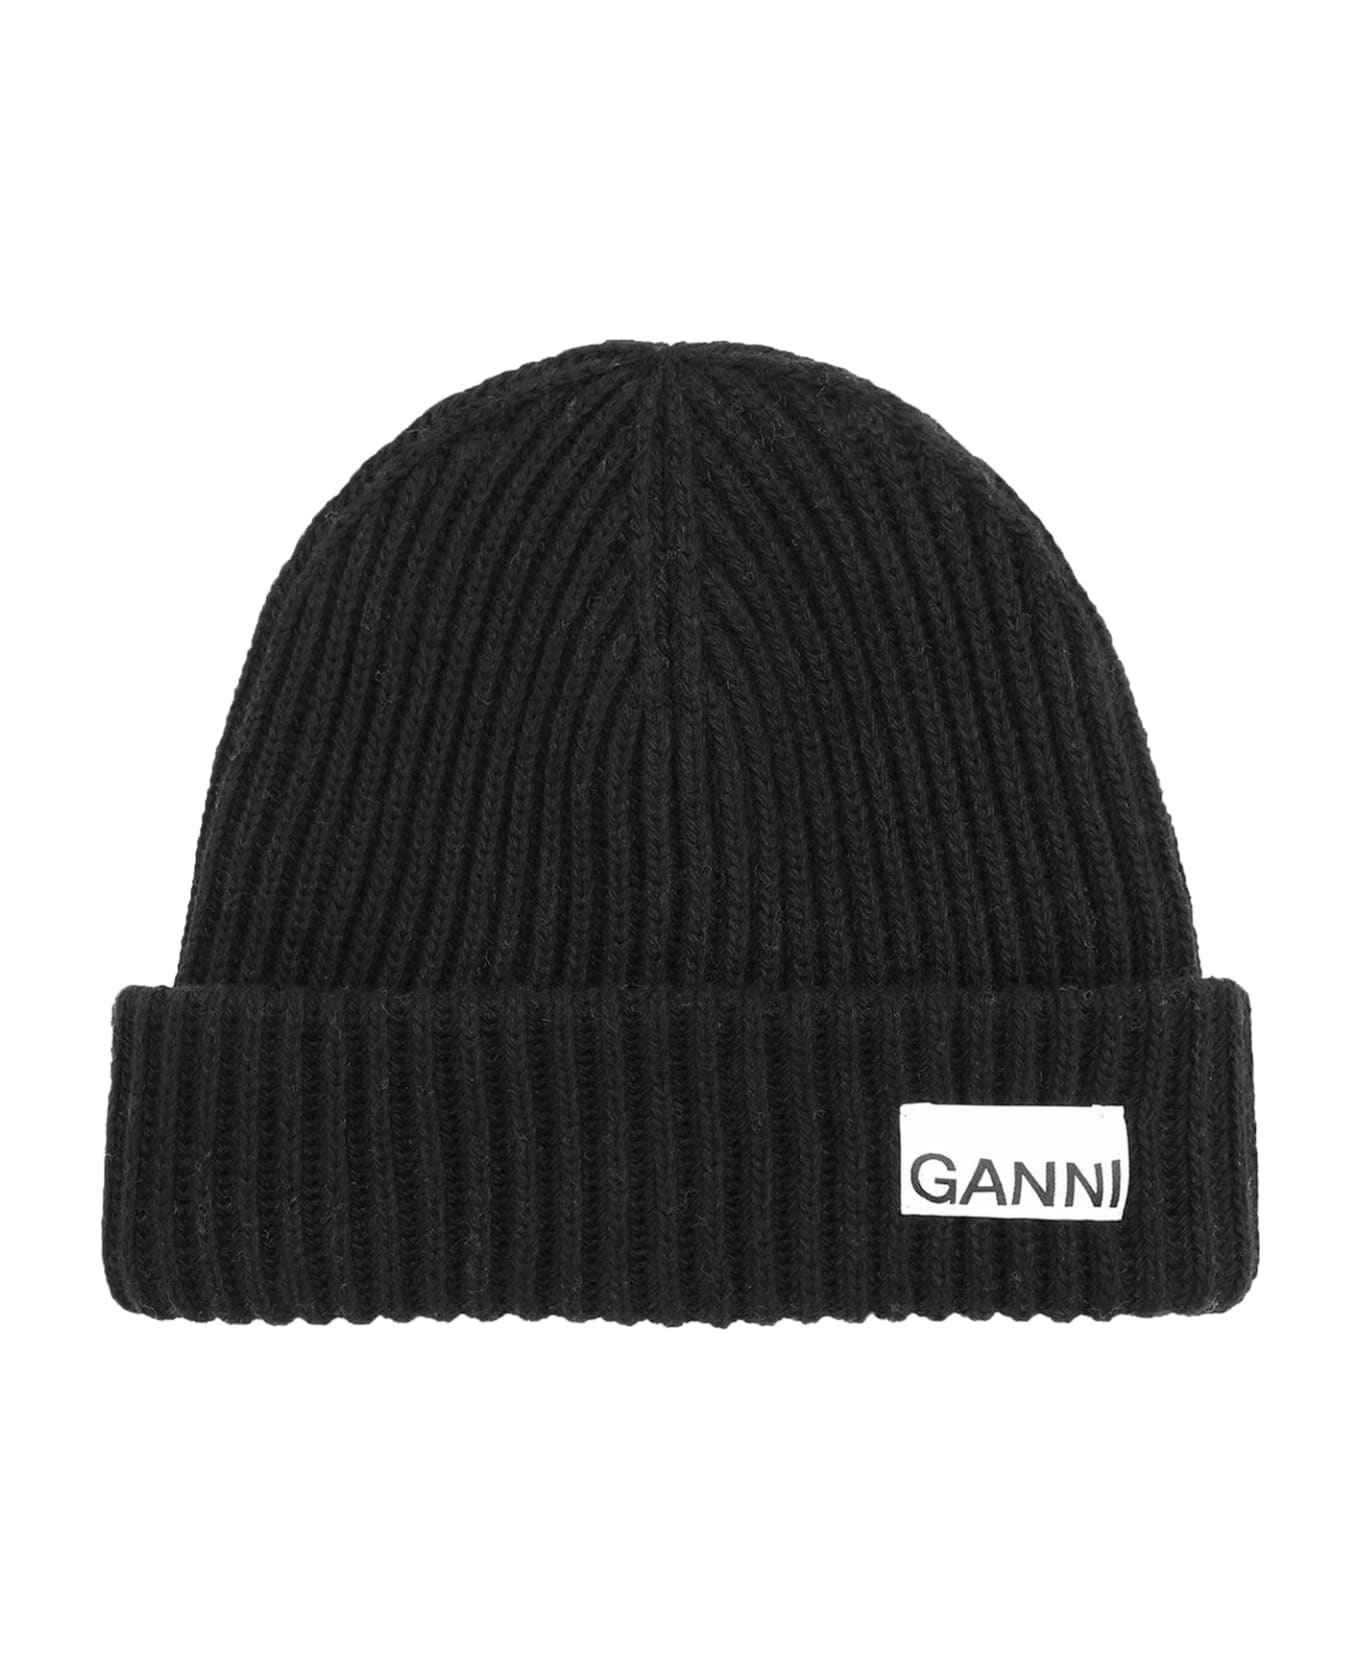 Ganni Structured Rib Beanie - Black